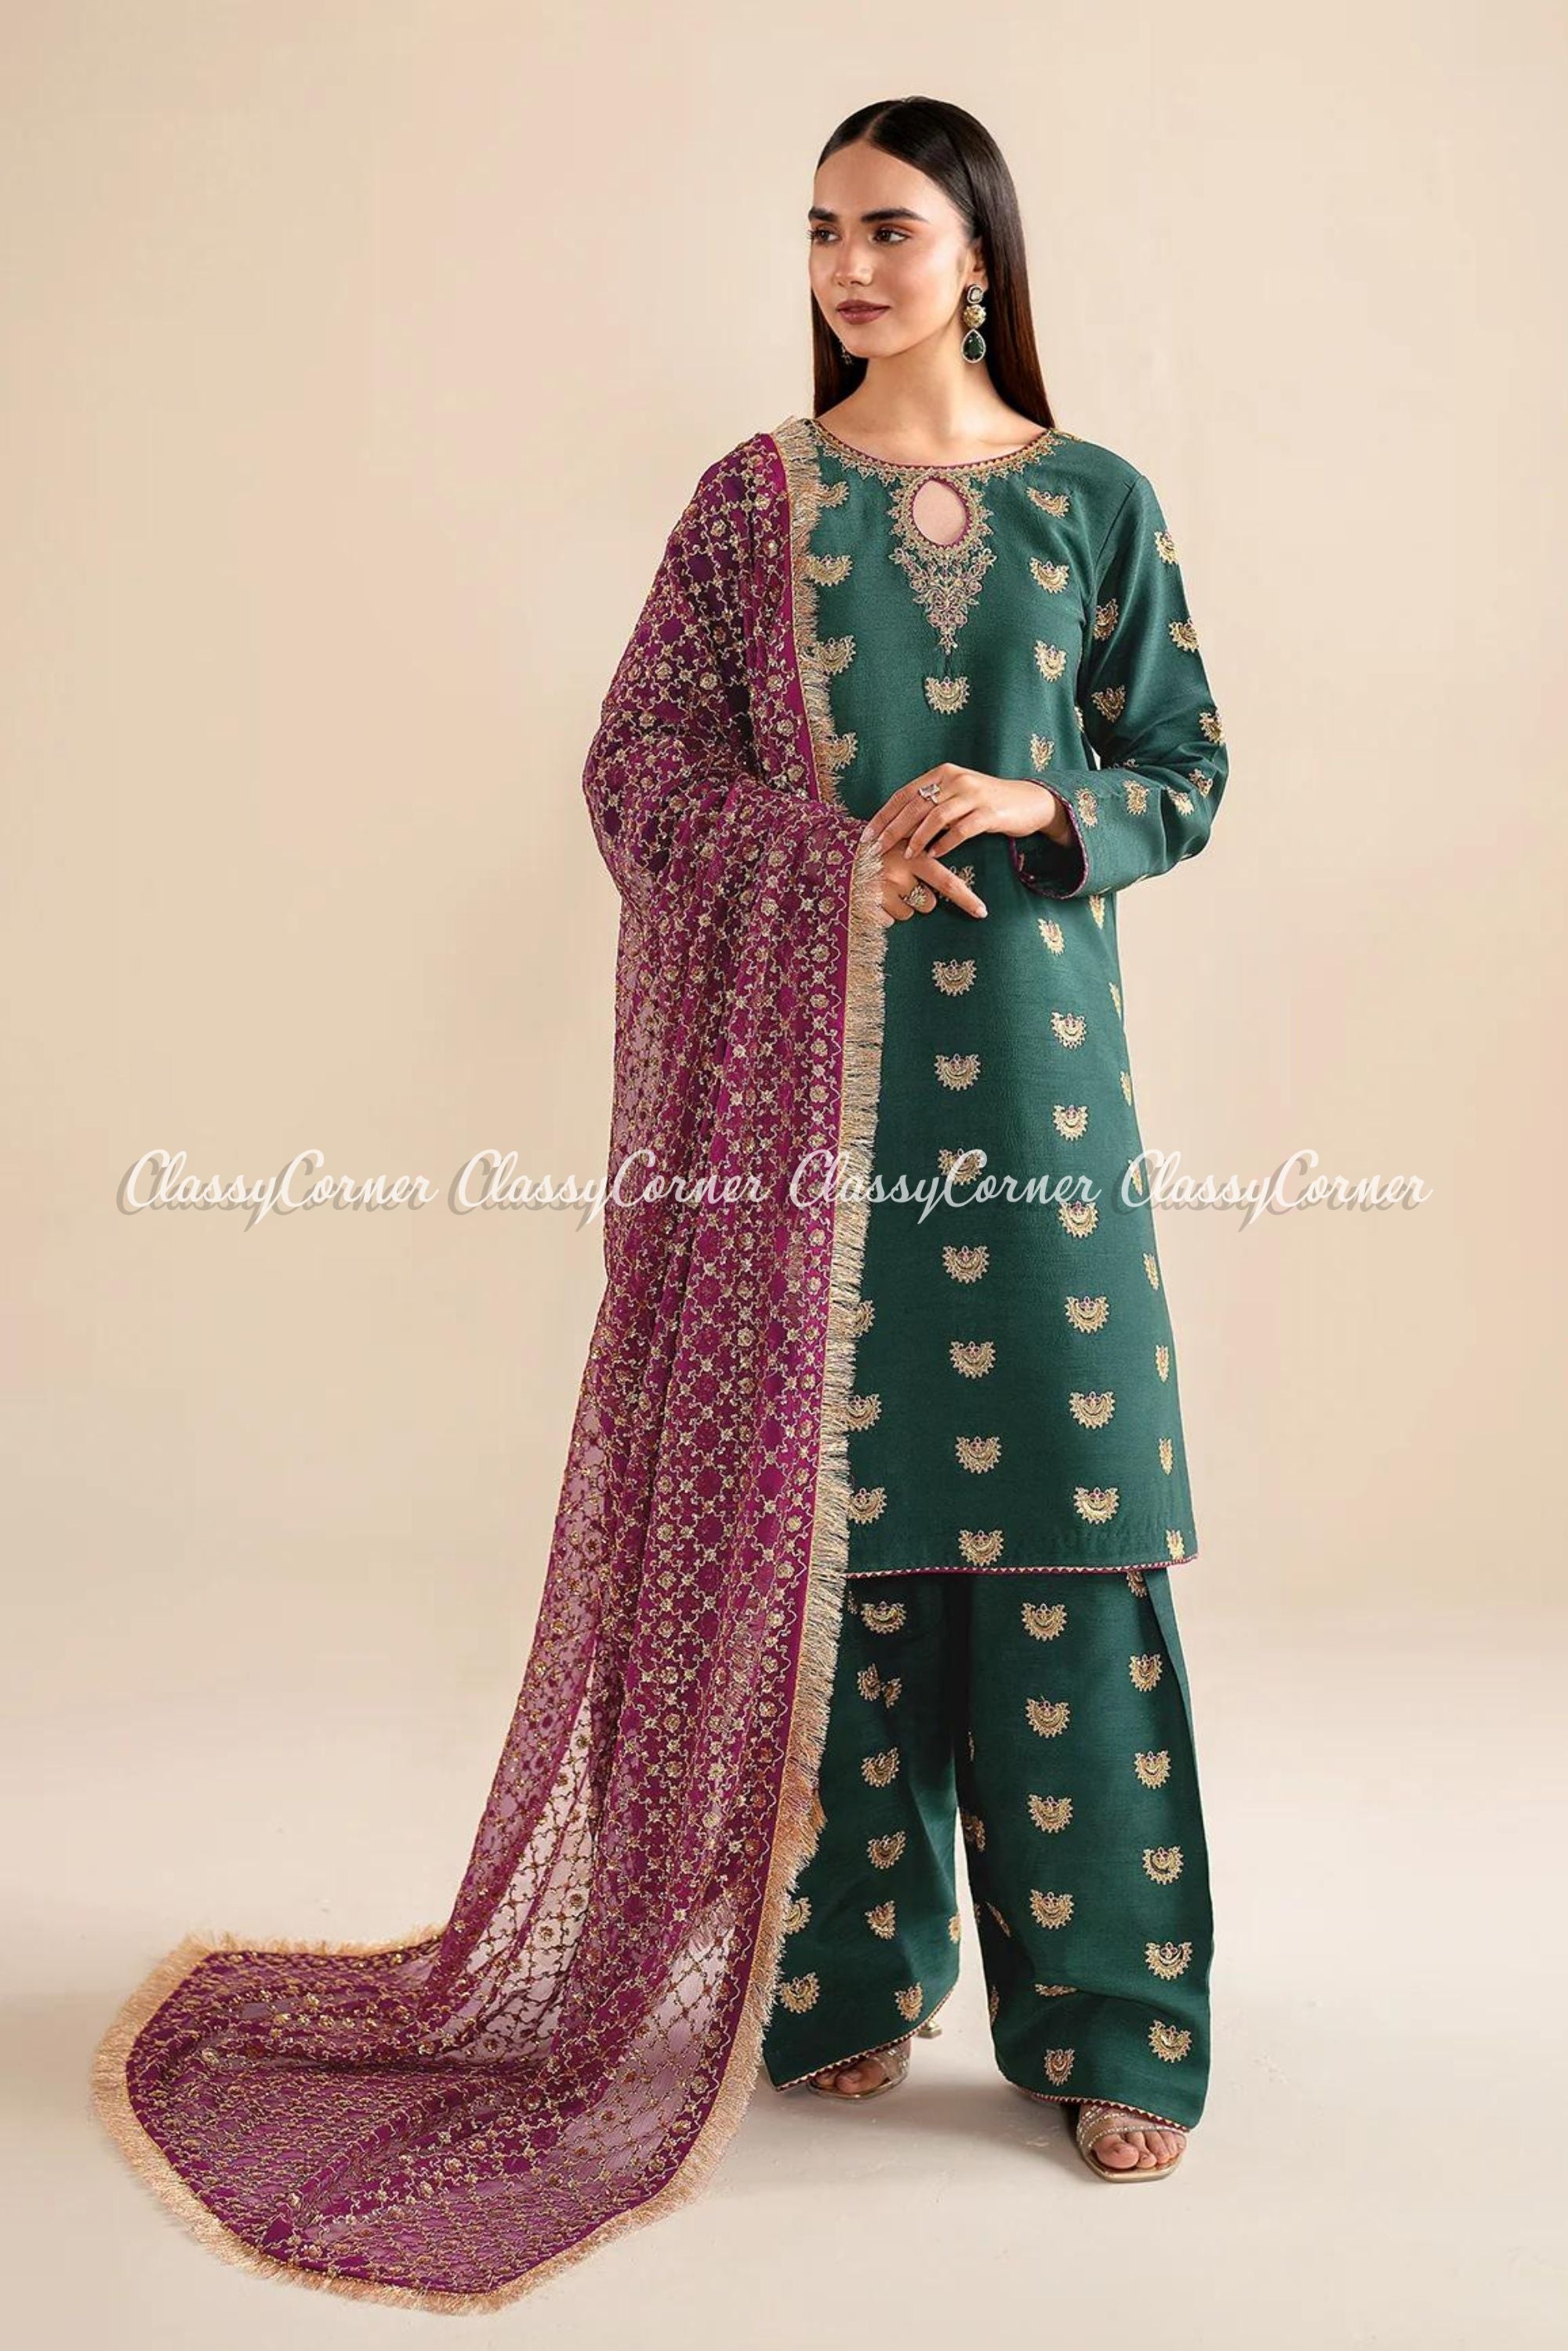 Pakistani wedding clothes for females